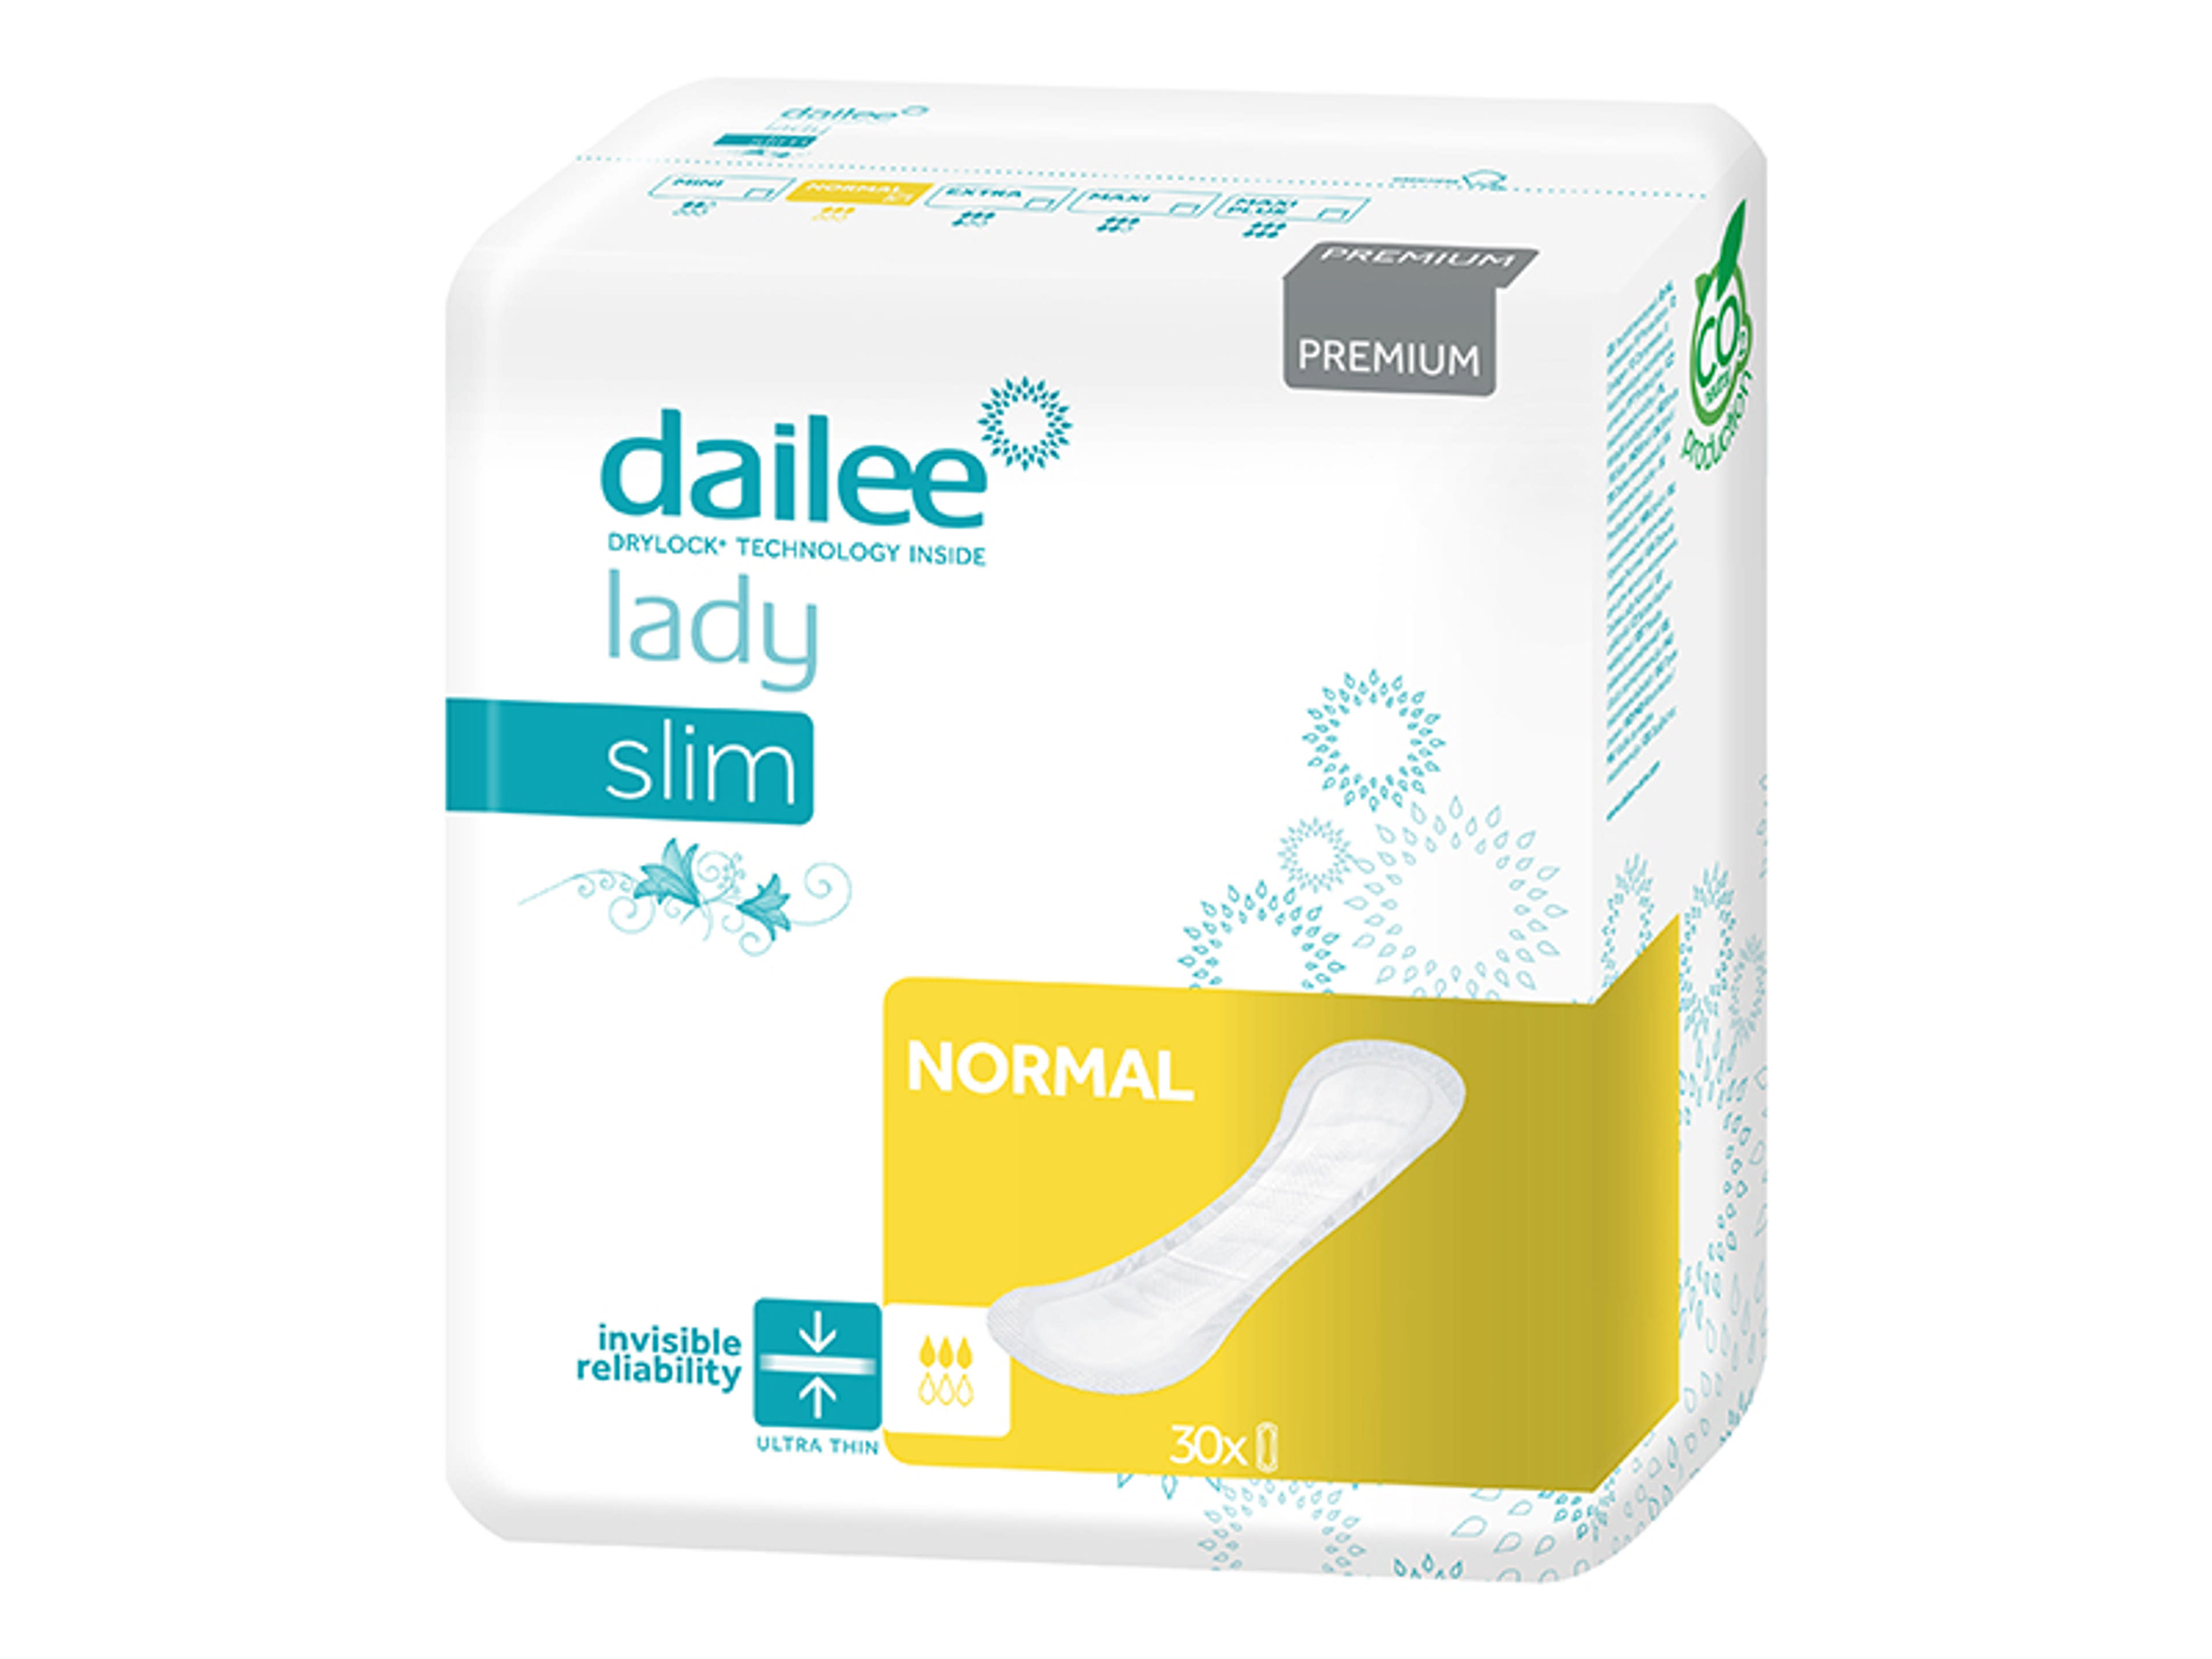 Dailee Lady Premium Slim Normal inkontinencia betét – 30 db-1